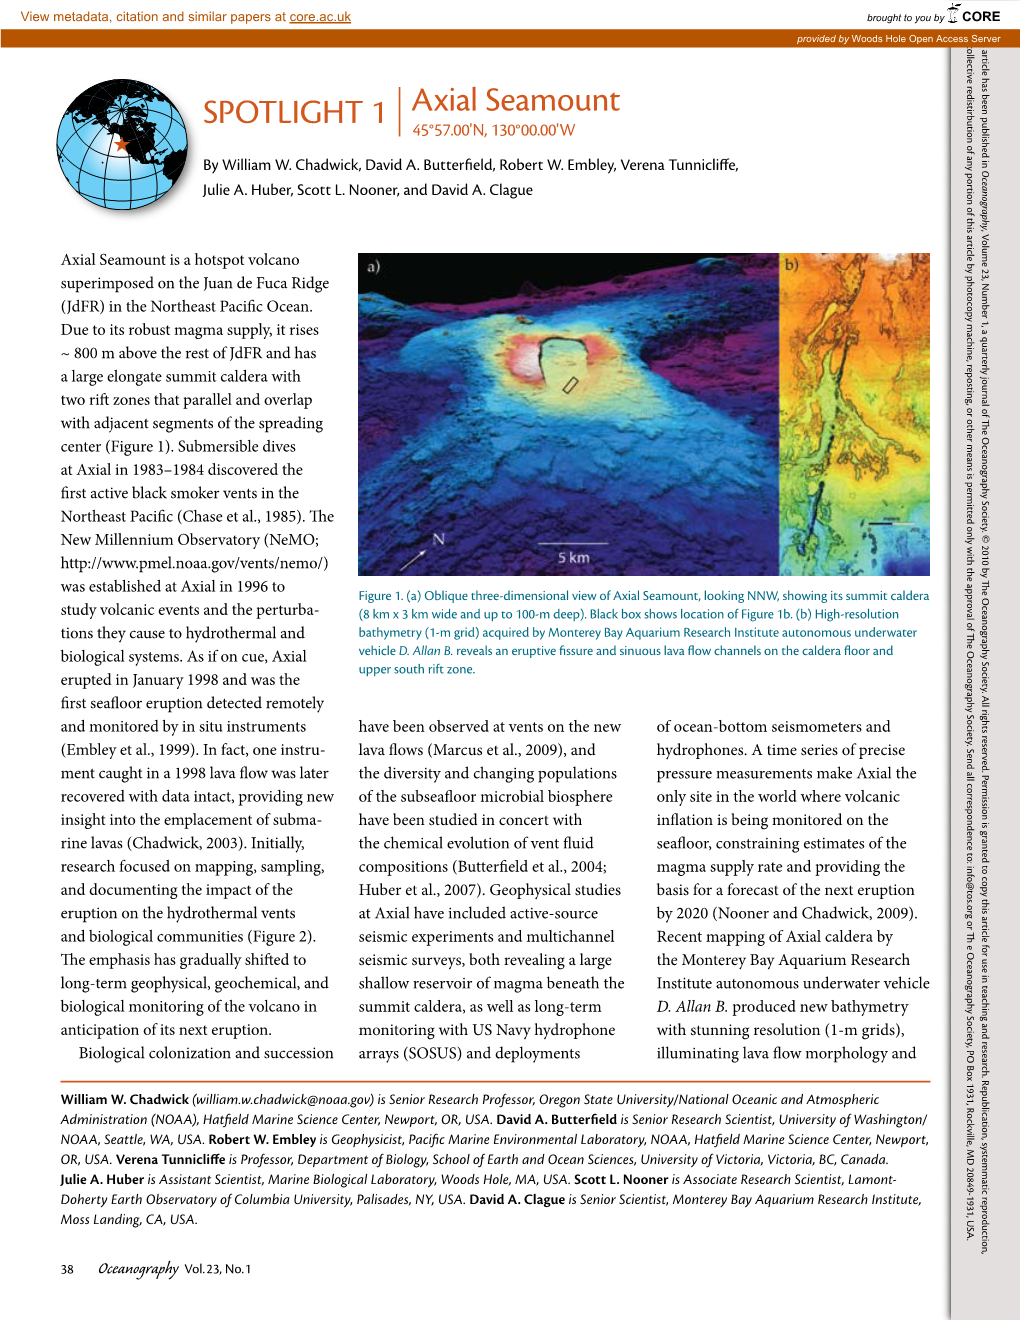 Spotlight 1Axial Seamount